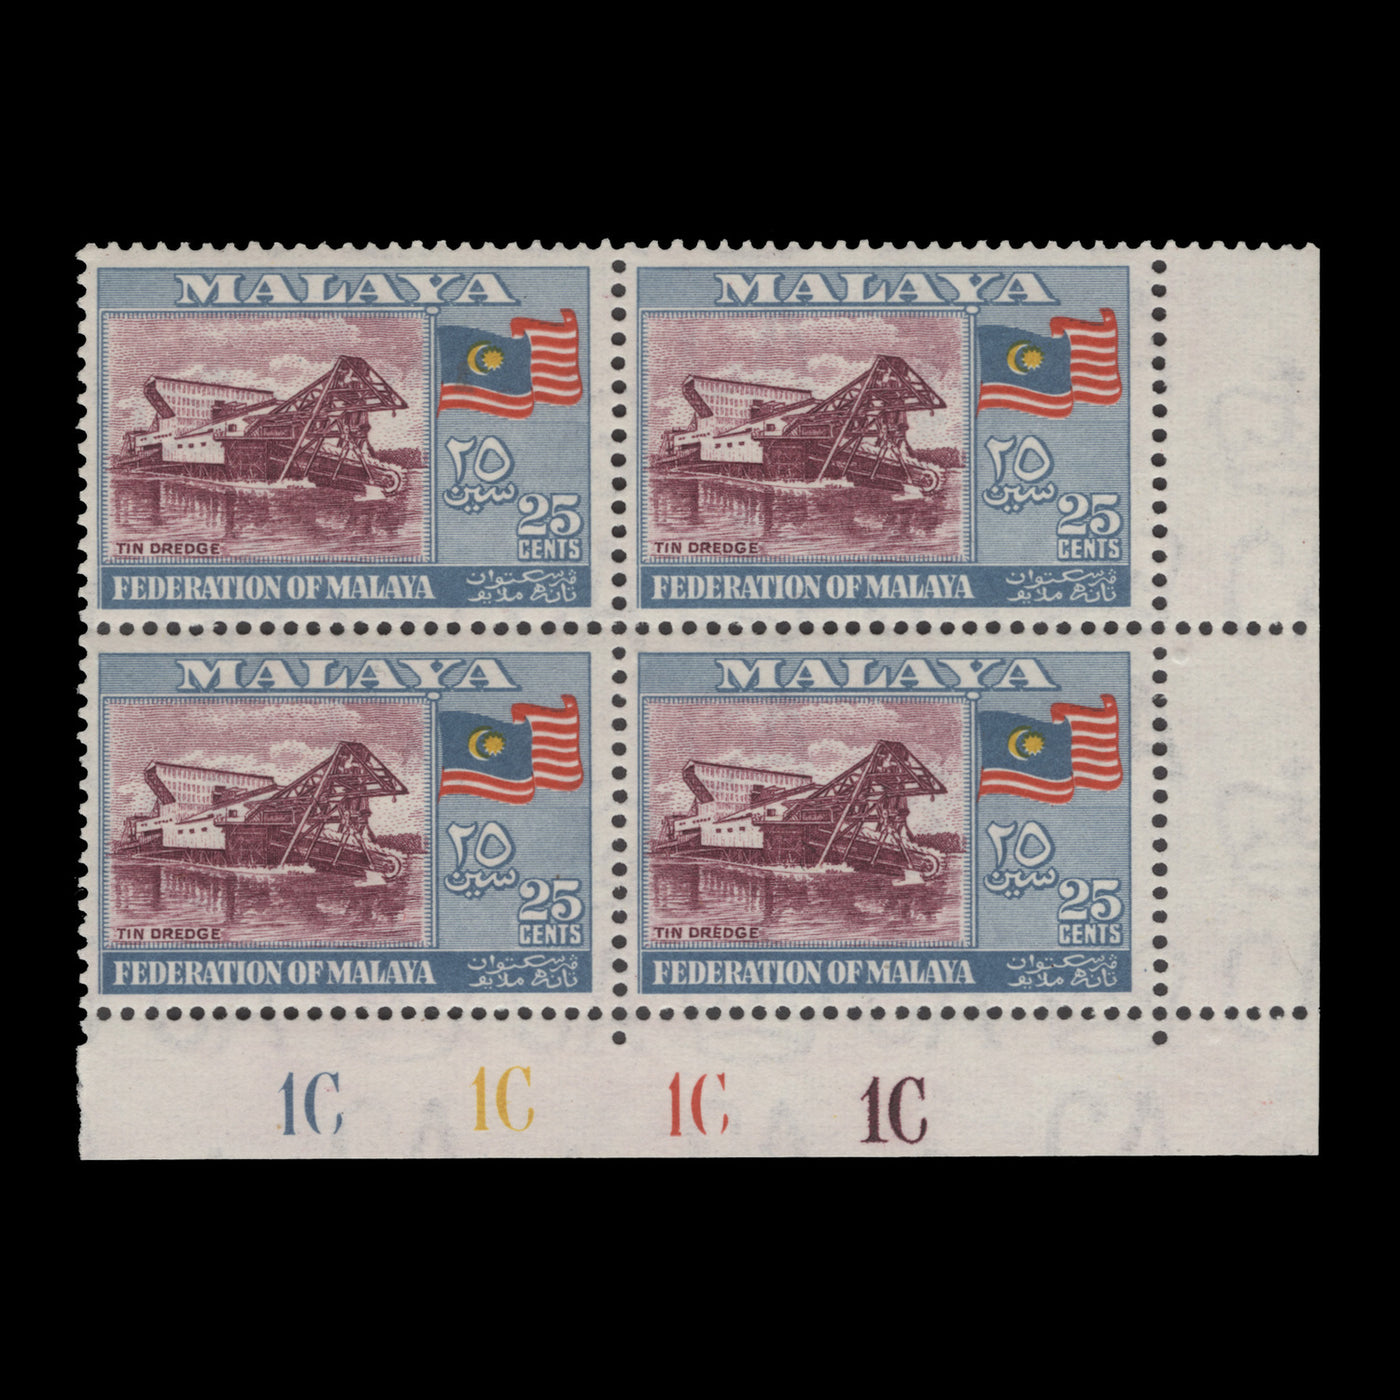 Malaya 1957 25c Tin Dredger plate 1C–1C–1C–1C block